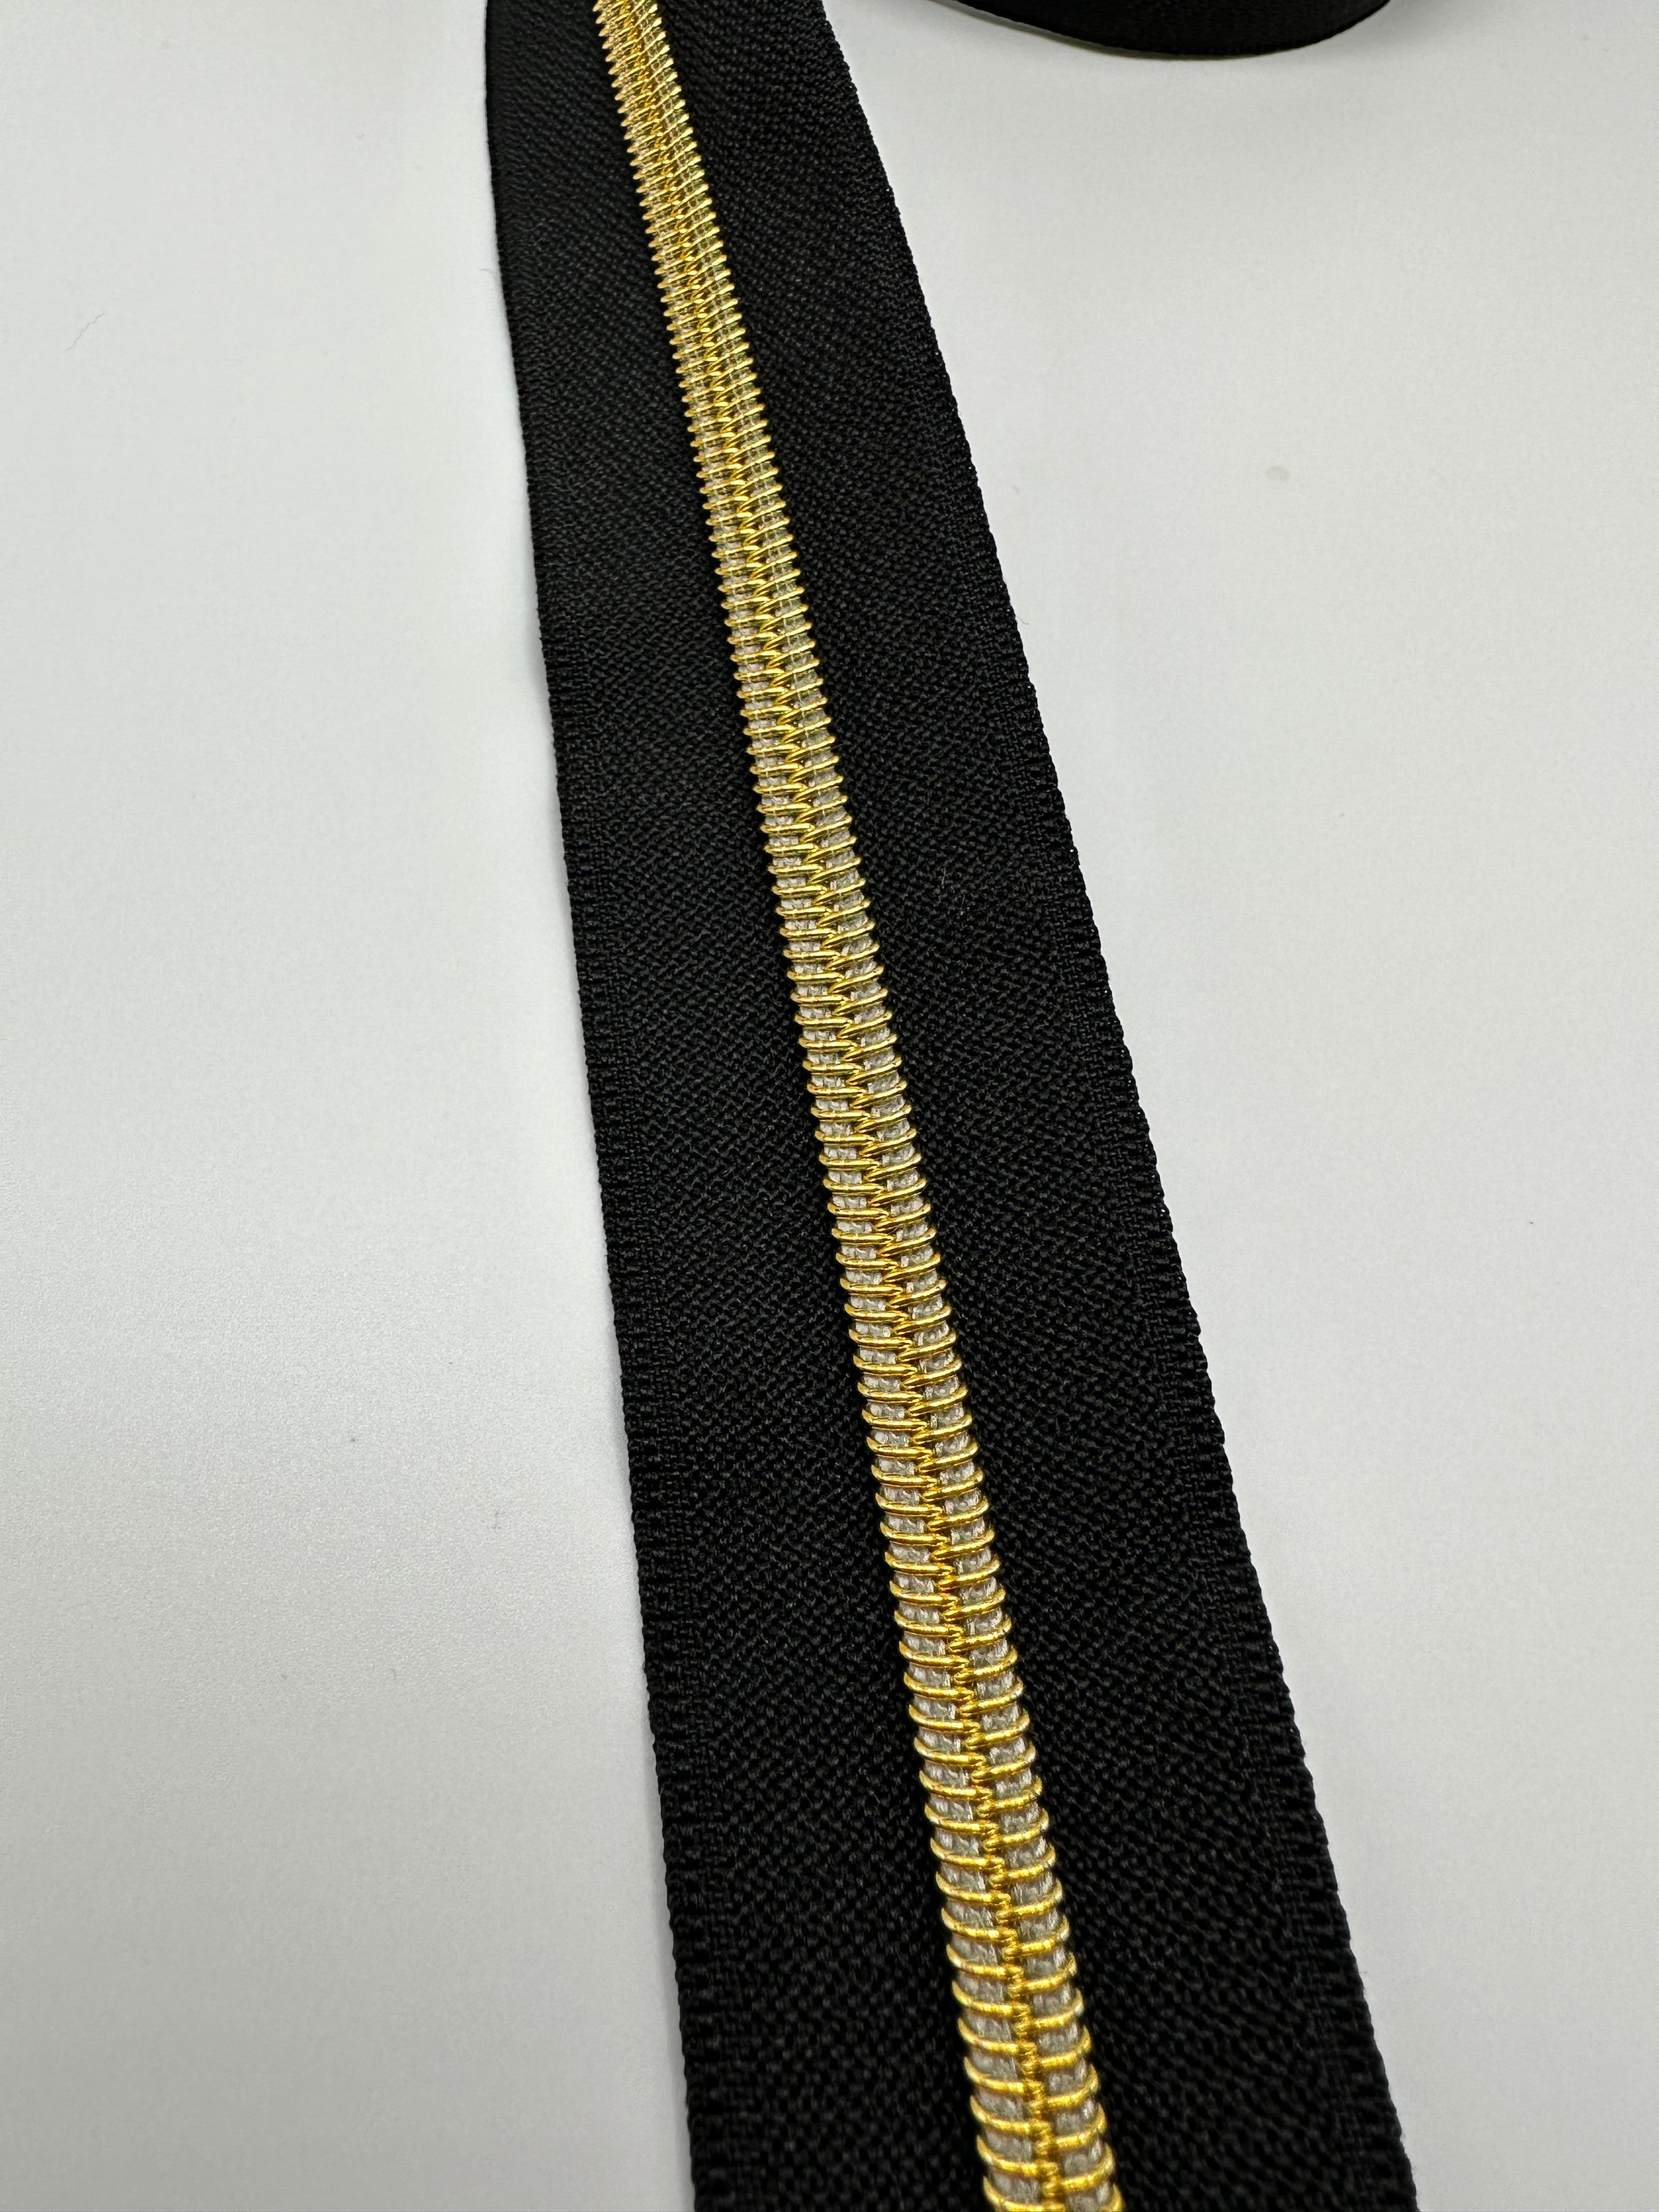 Gold teeth on Black zipper tape